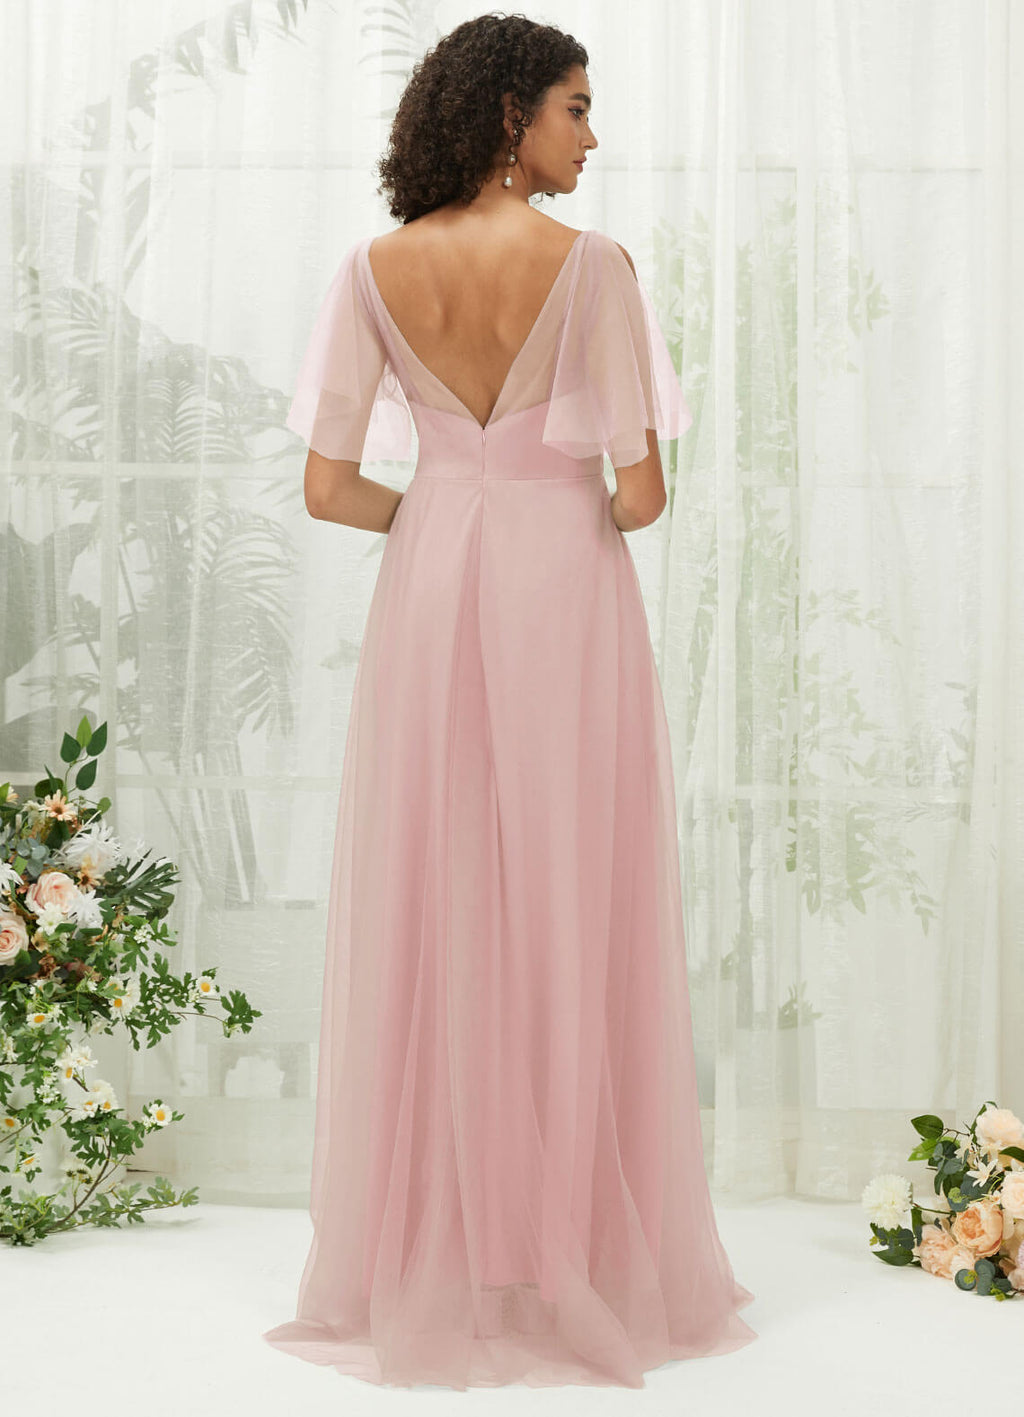 NZ Bridal Dusty Pink Tulle Short Sleeves Maxi bridesmaid dresses R1027 Dallas a